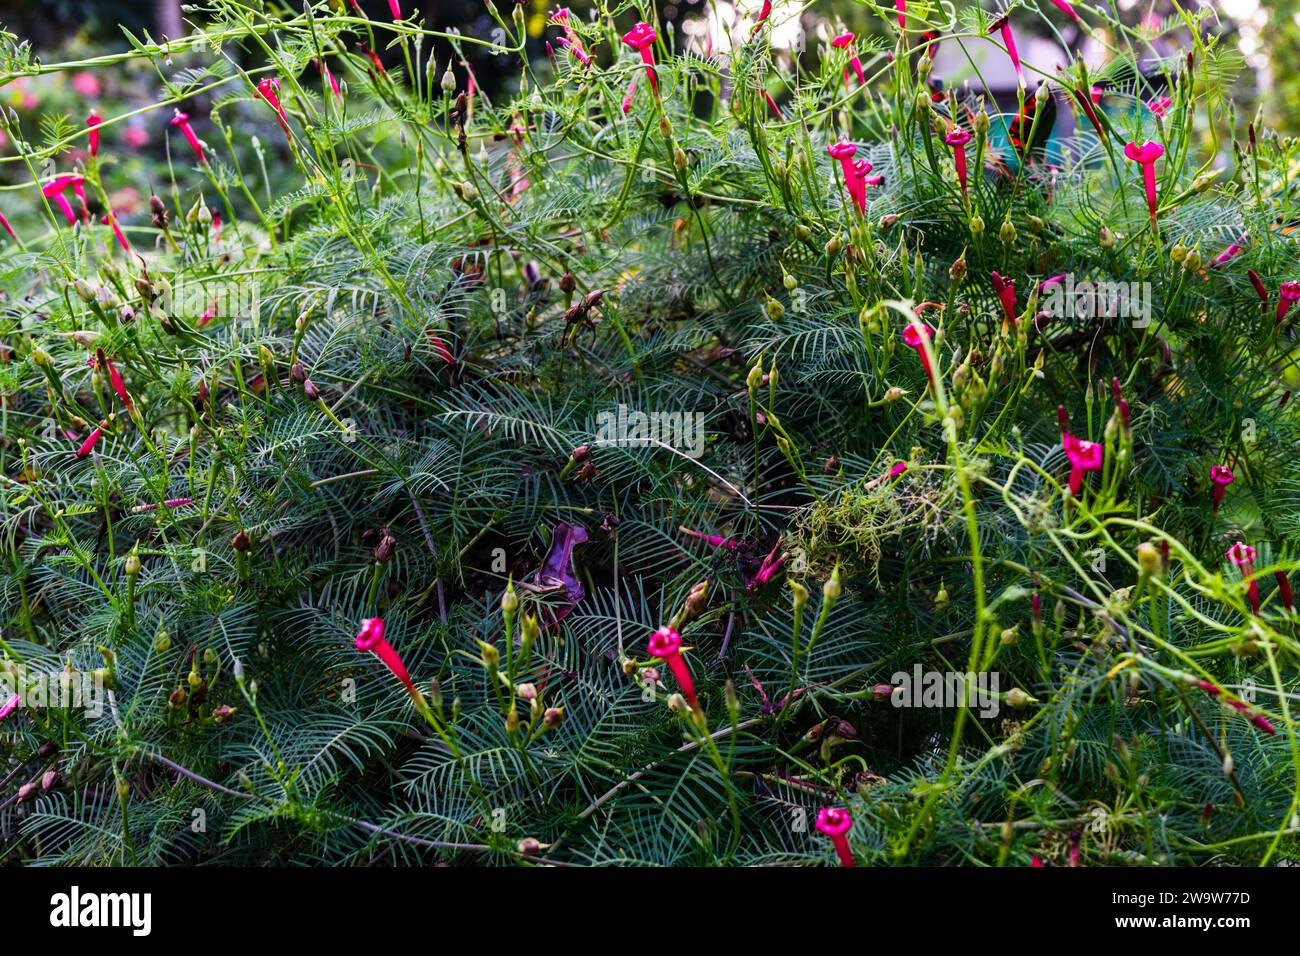 cypress vine, Ipomoea quamoclit is blooming. Selective focus. Stock Photo